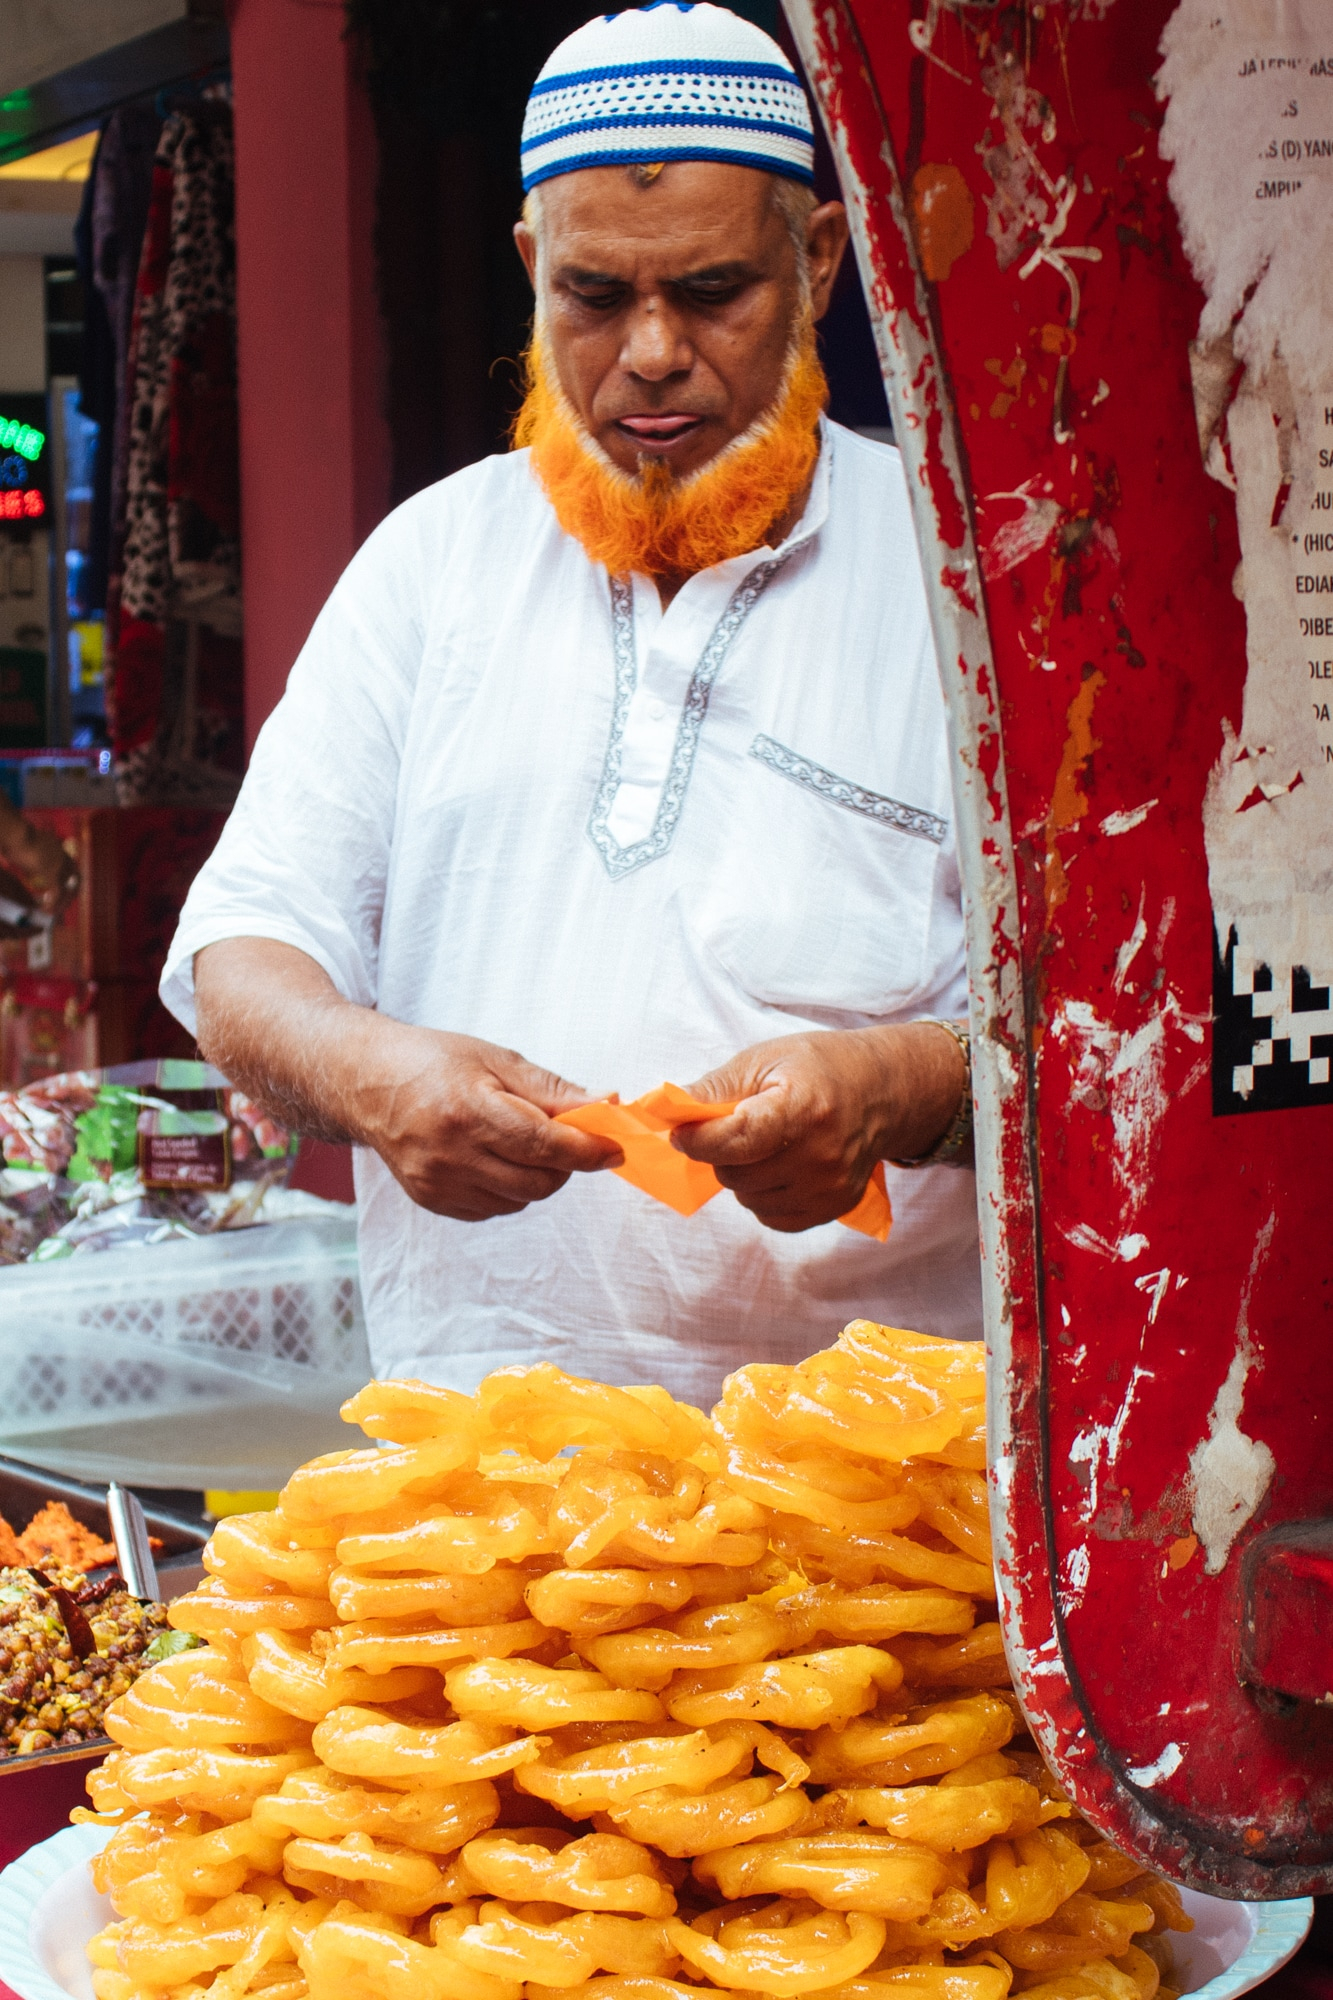 A man selling street food during Ramdan